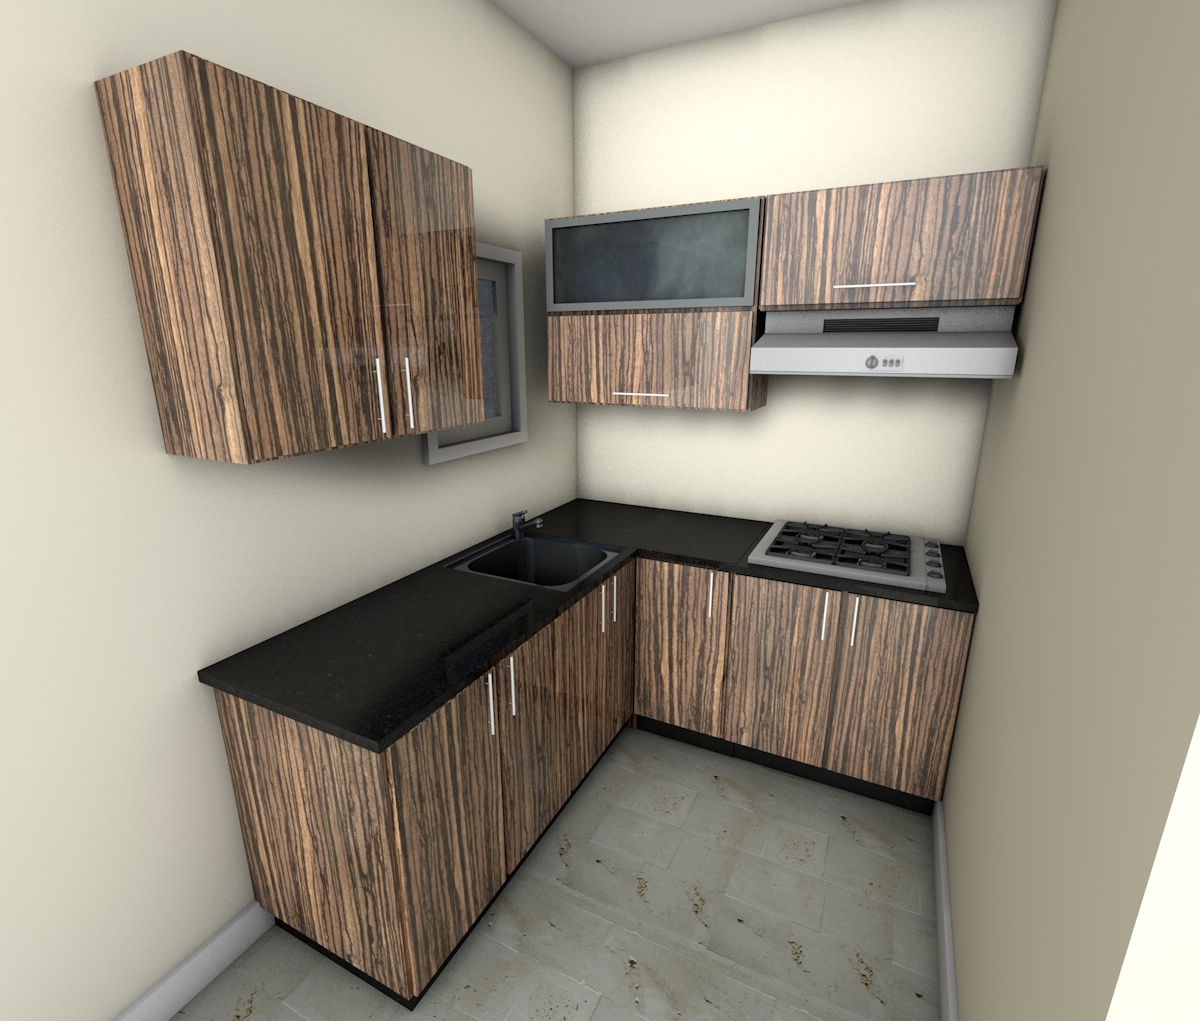 design kitchens colours concepts Zibrano Granite glossy